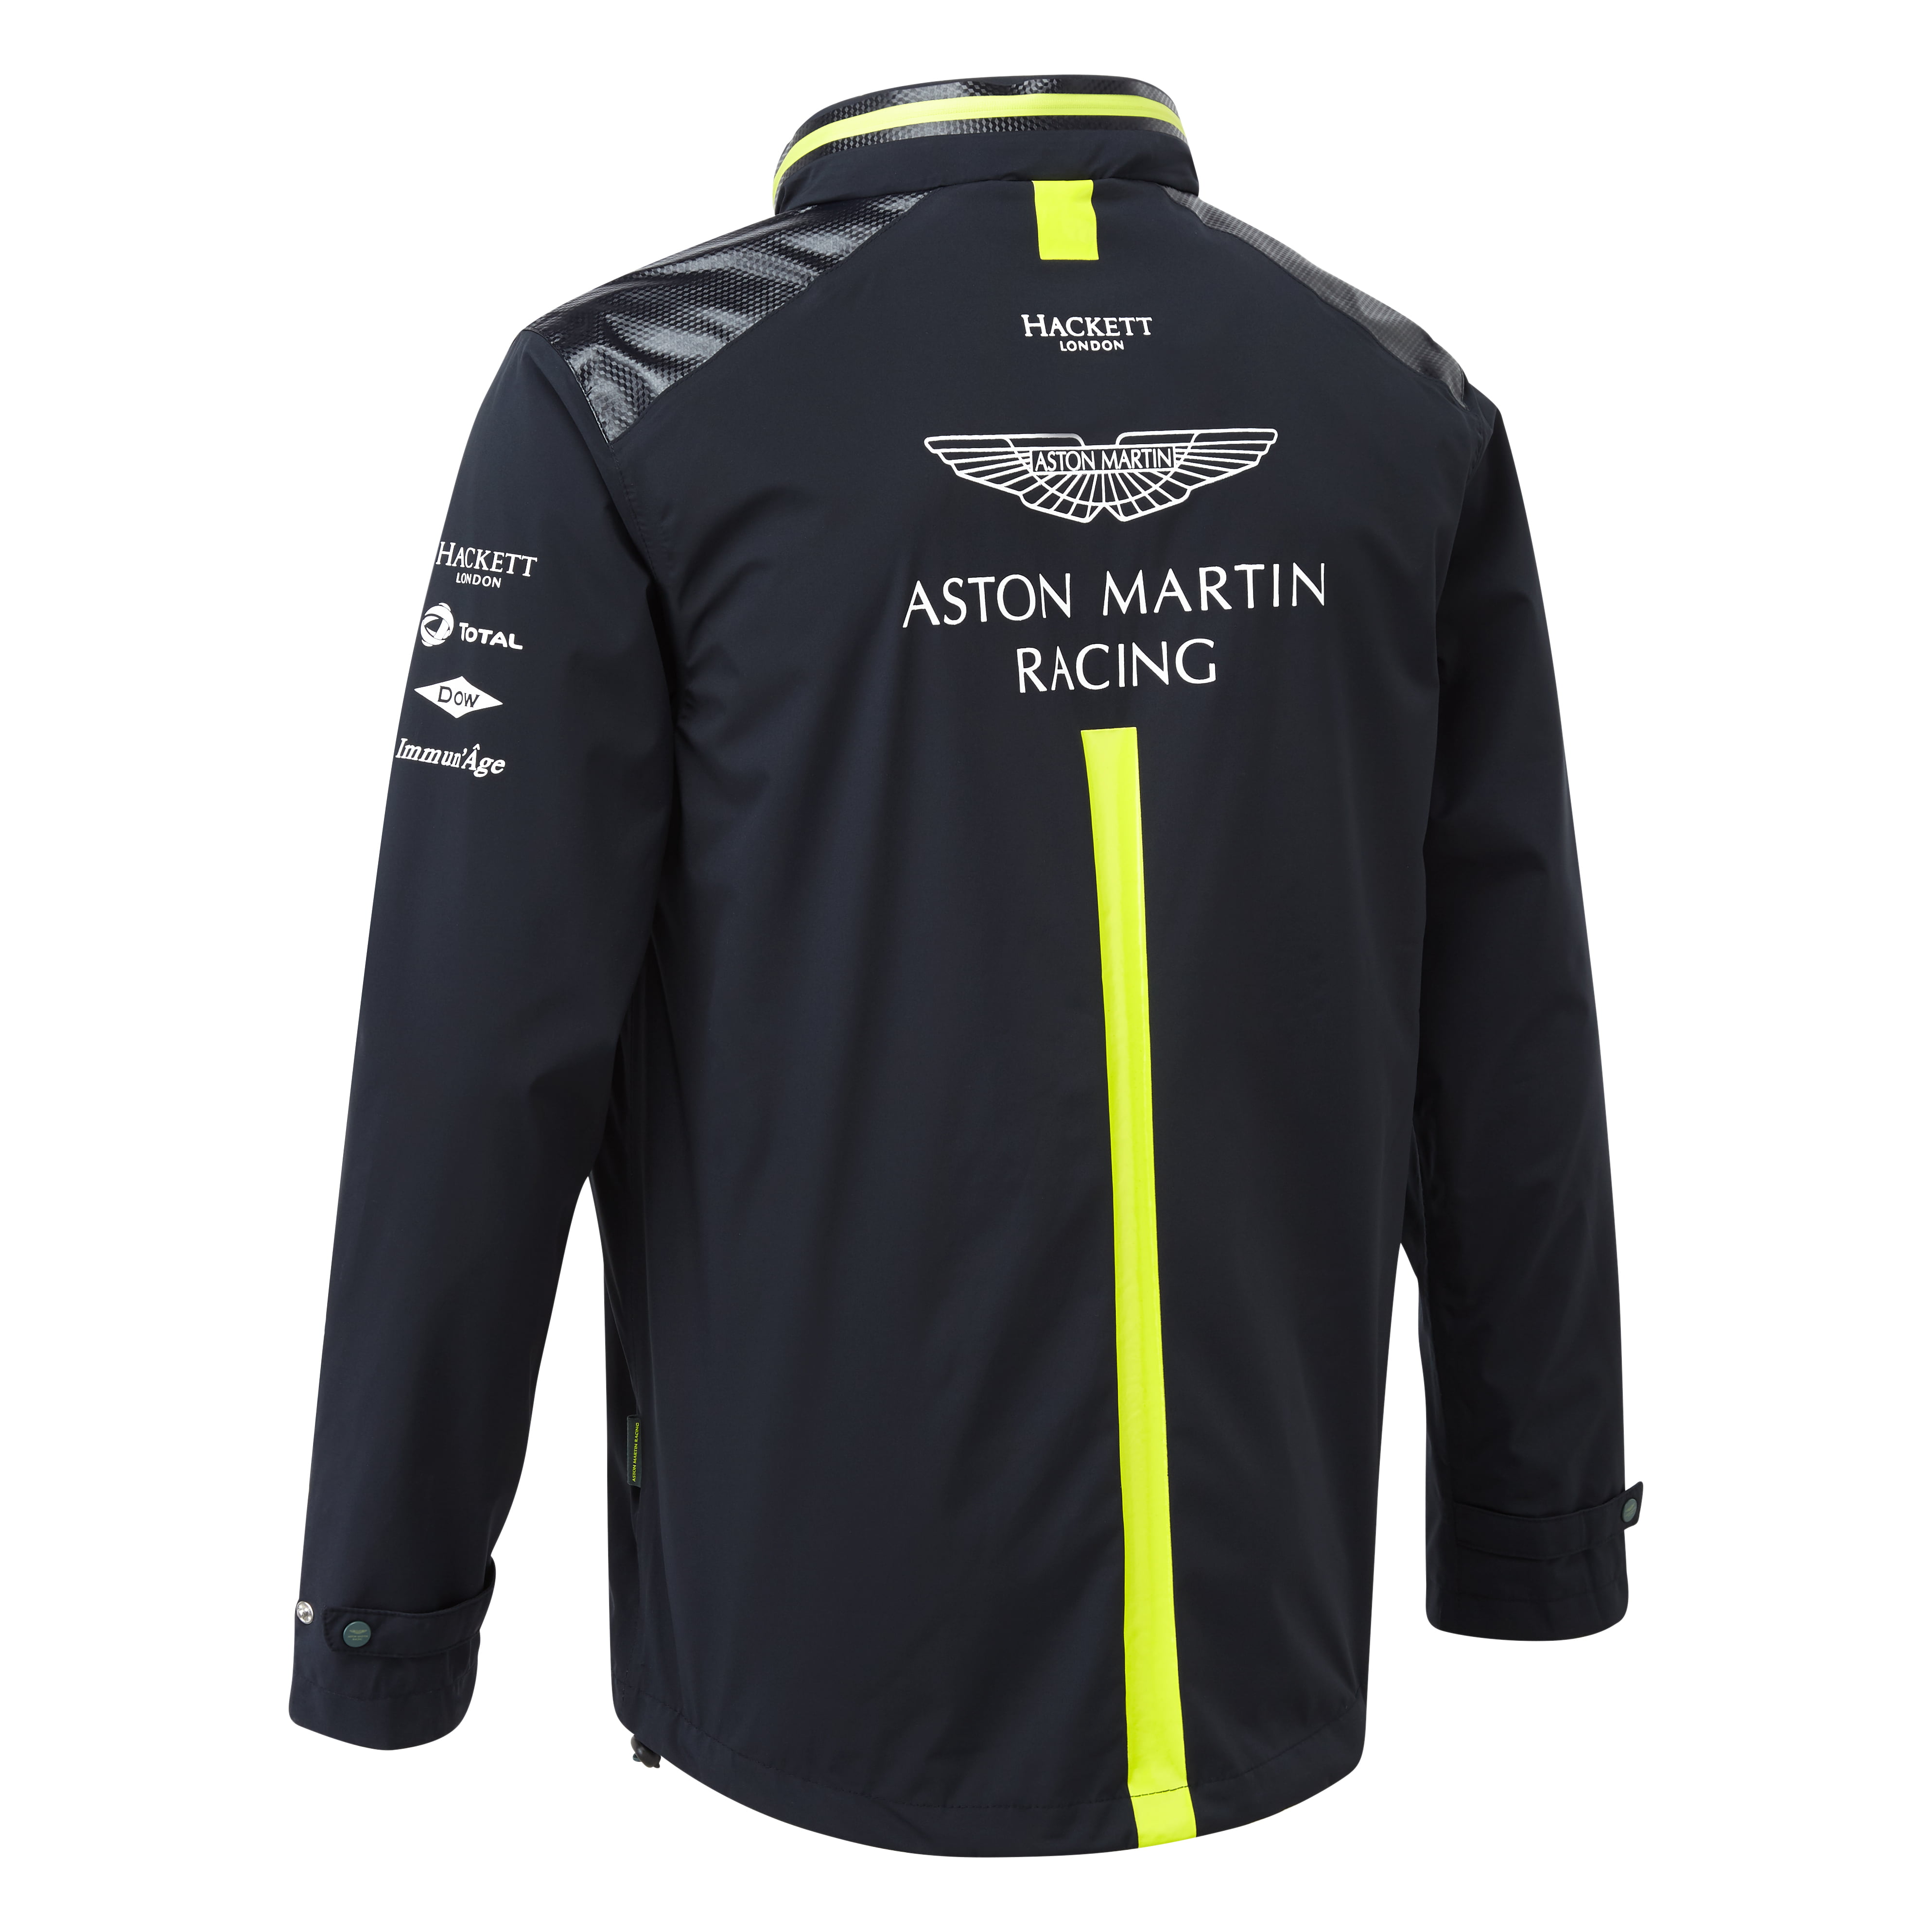 Aston Martin Racing Team Jacket - Walmart.com